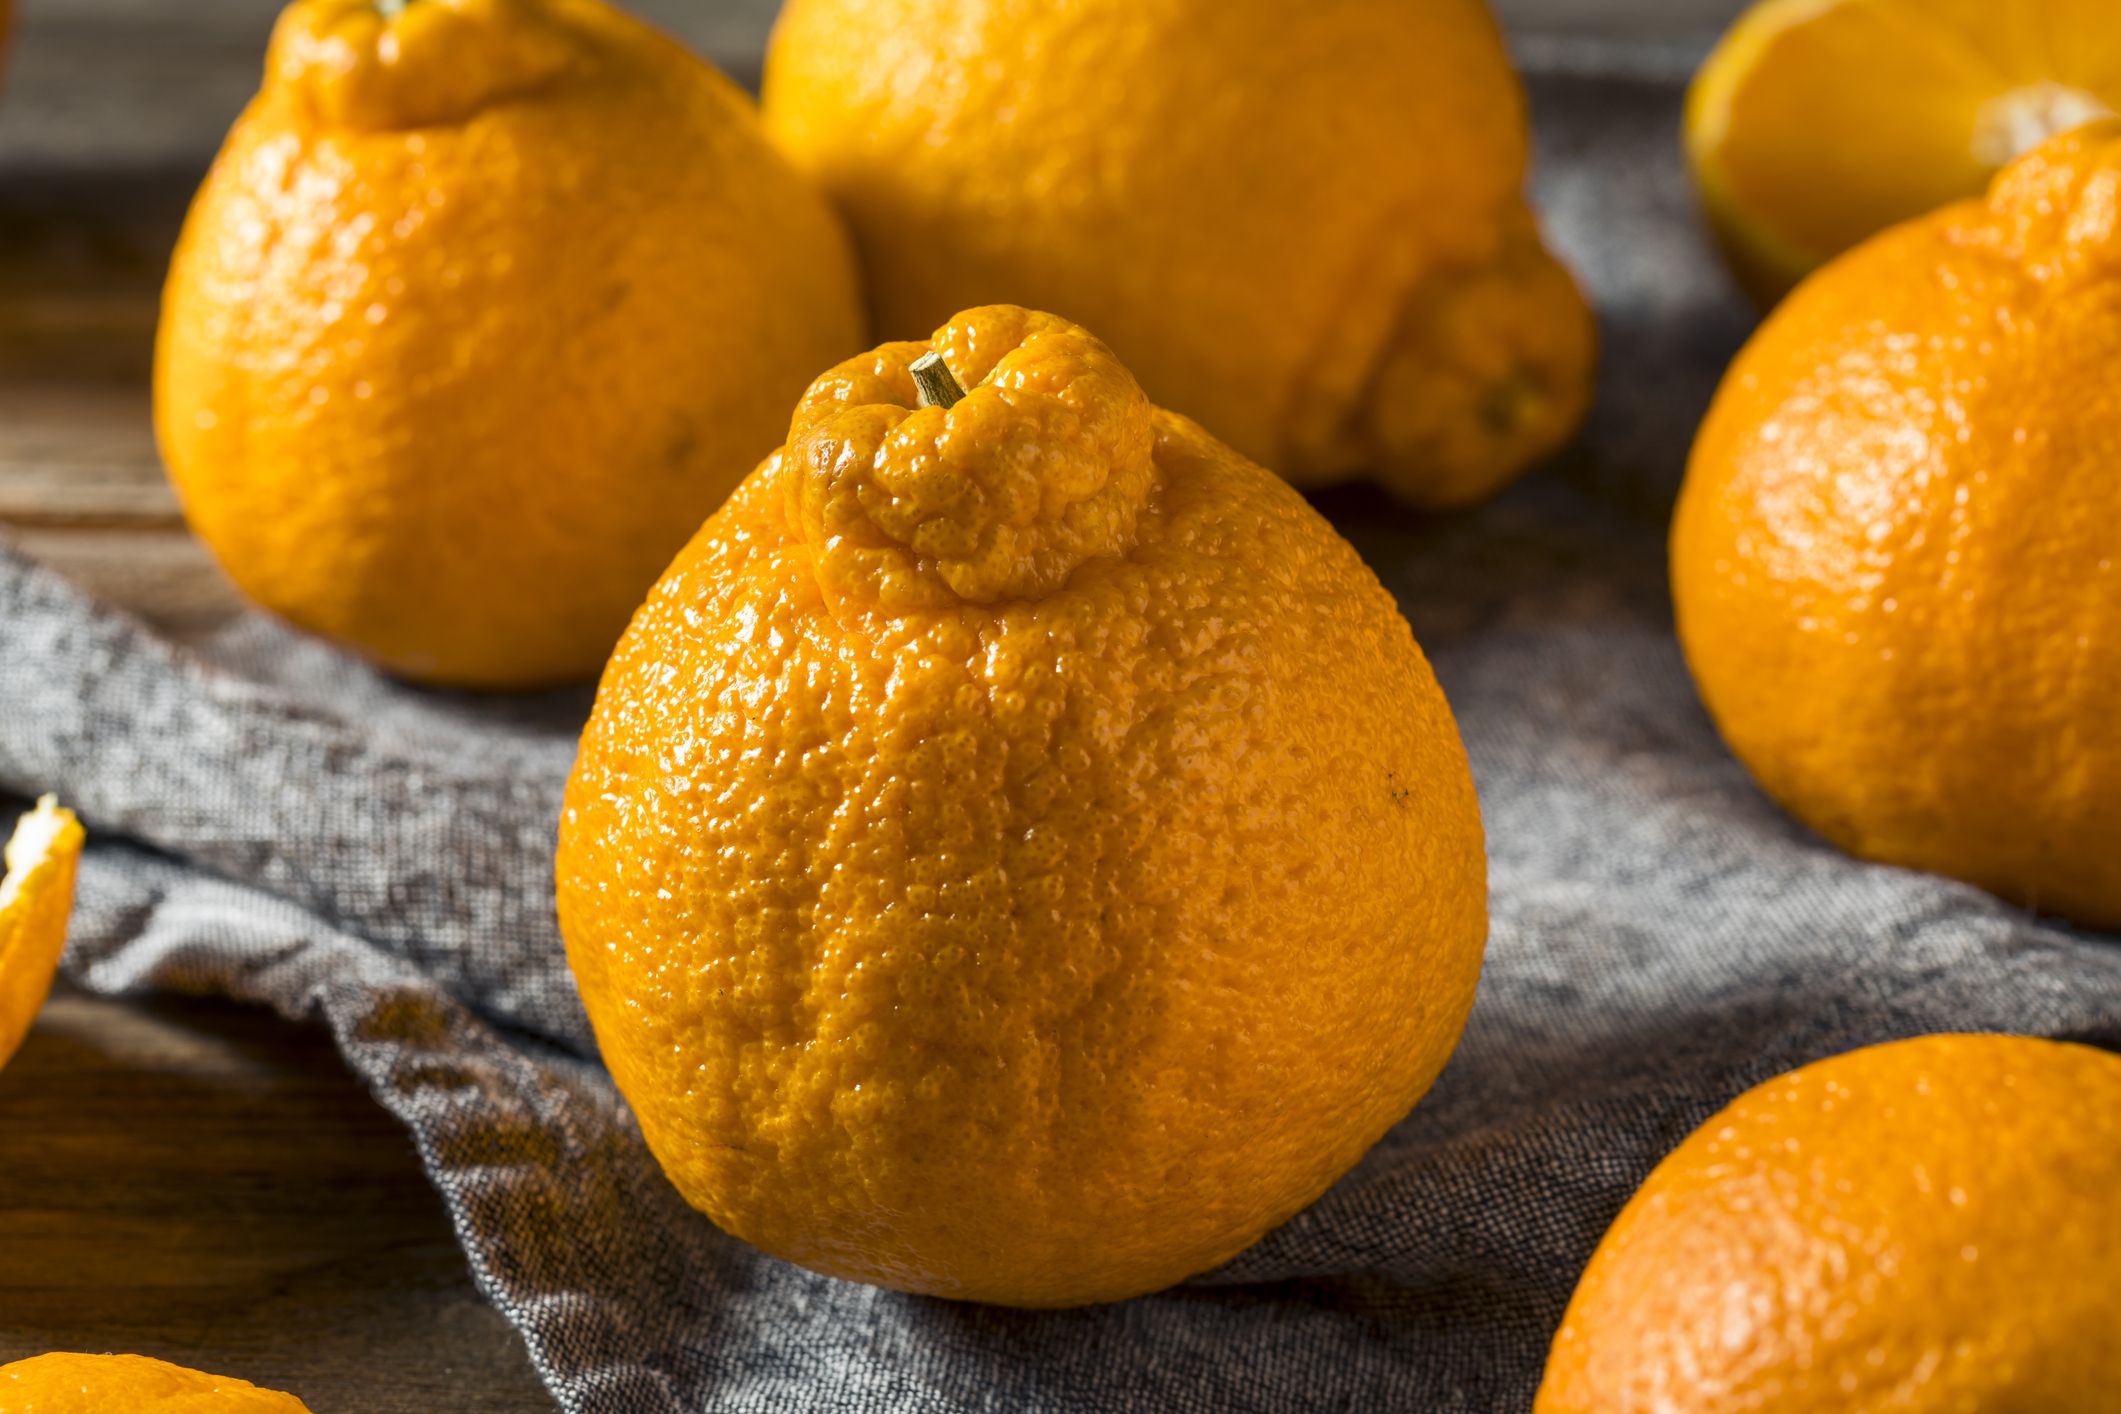 Why are Sumo Oranges trending on TikTok? Internet's latest